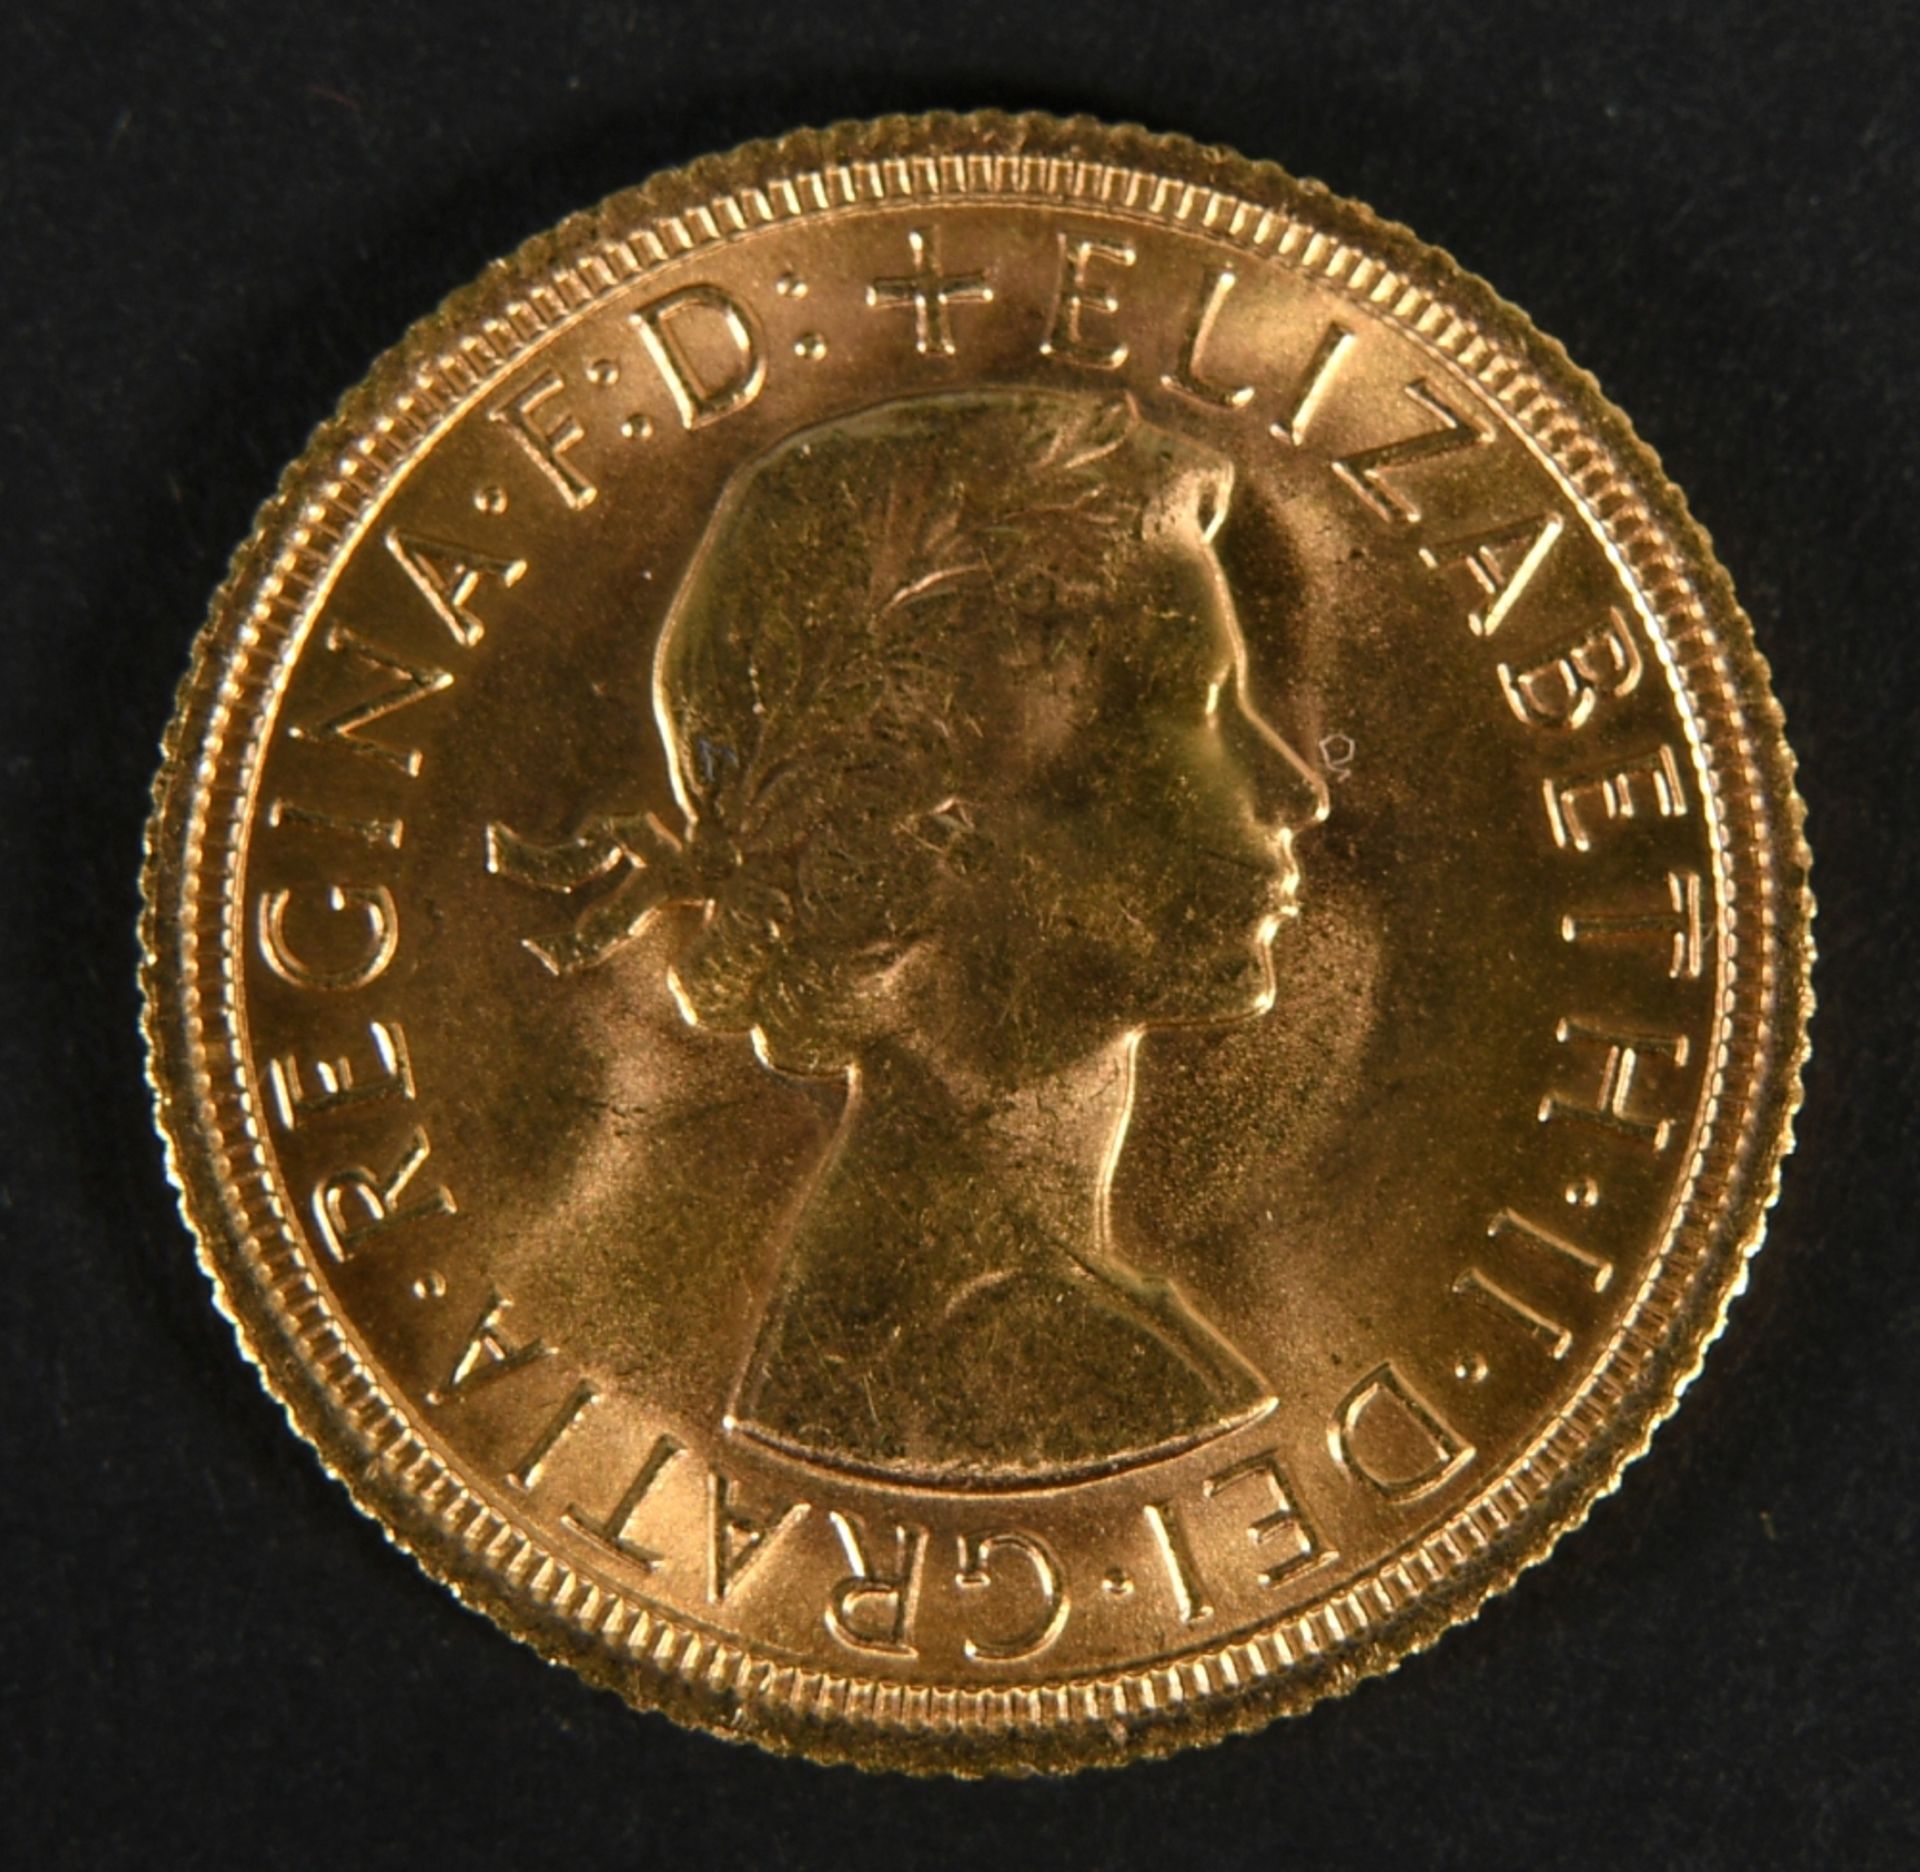 Münze - Goldmünze "1 Sovereign 1968" - Image 2 of 3